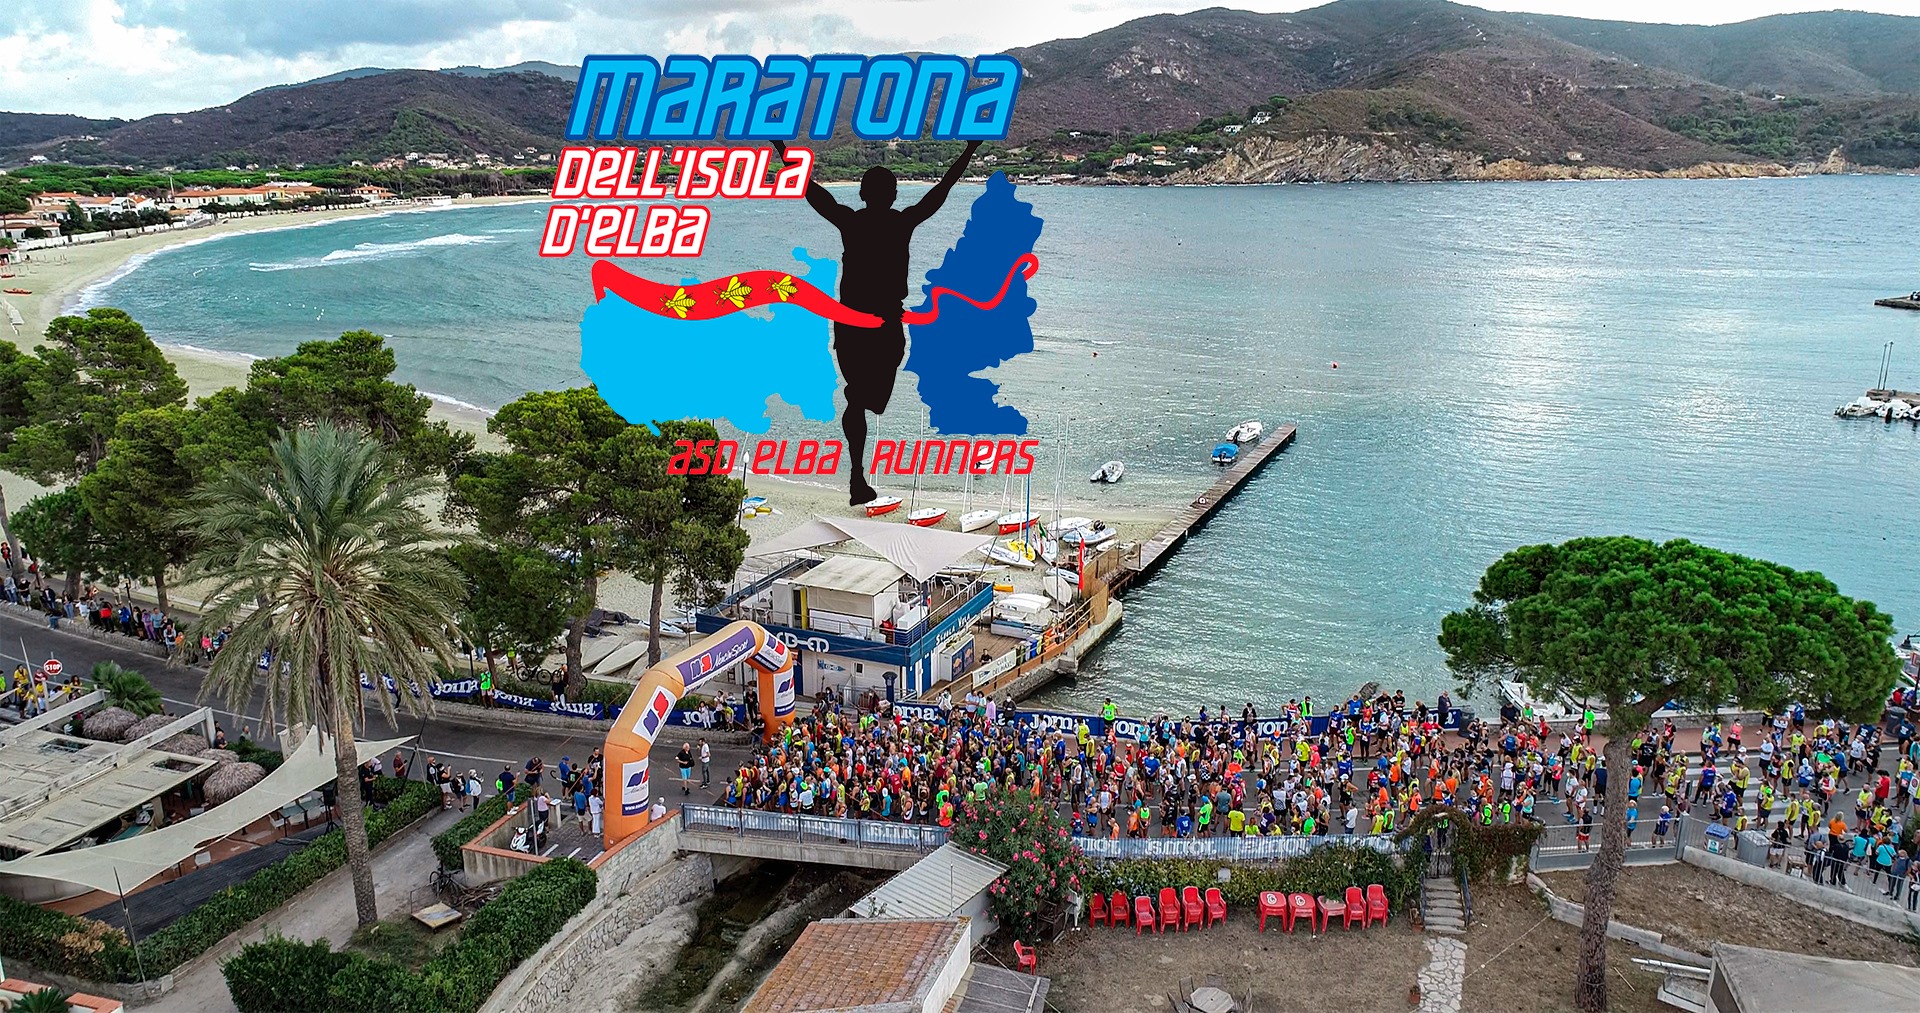 Torna la Maratona dell'isola d'Elba . Radio Bruno si conferma official media partner.